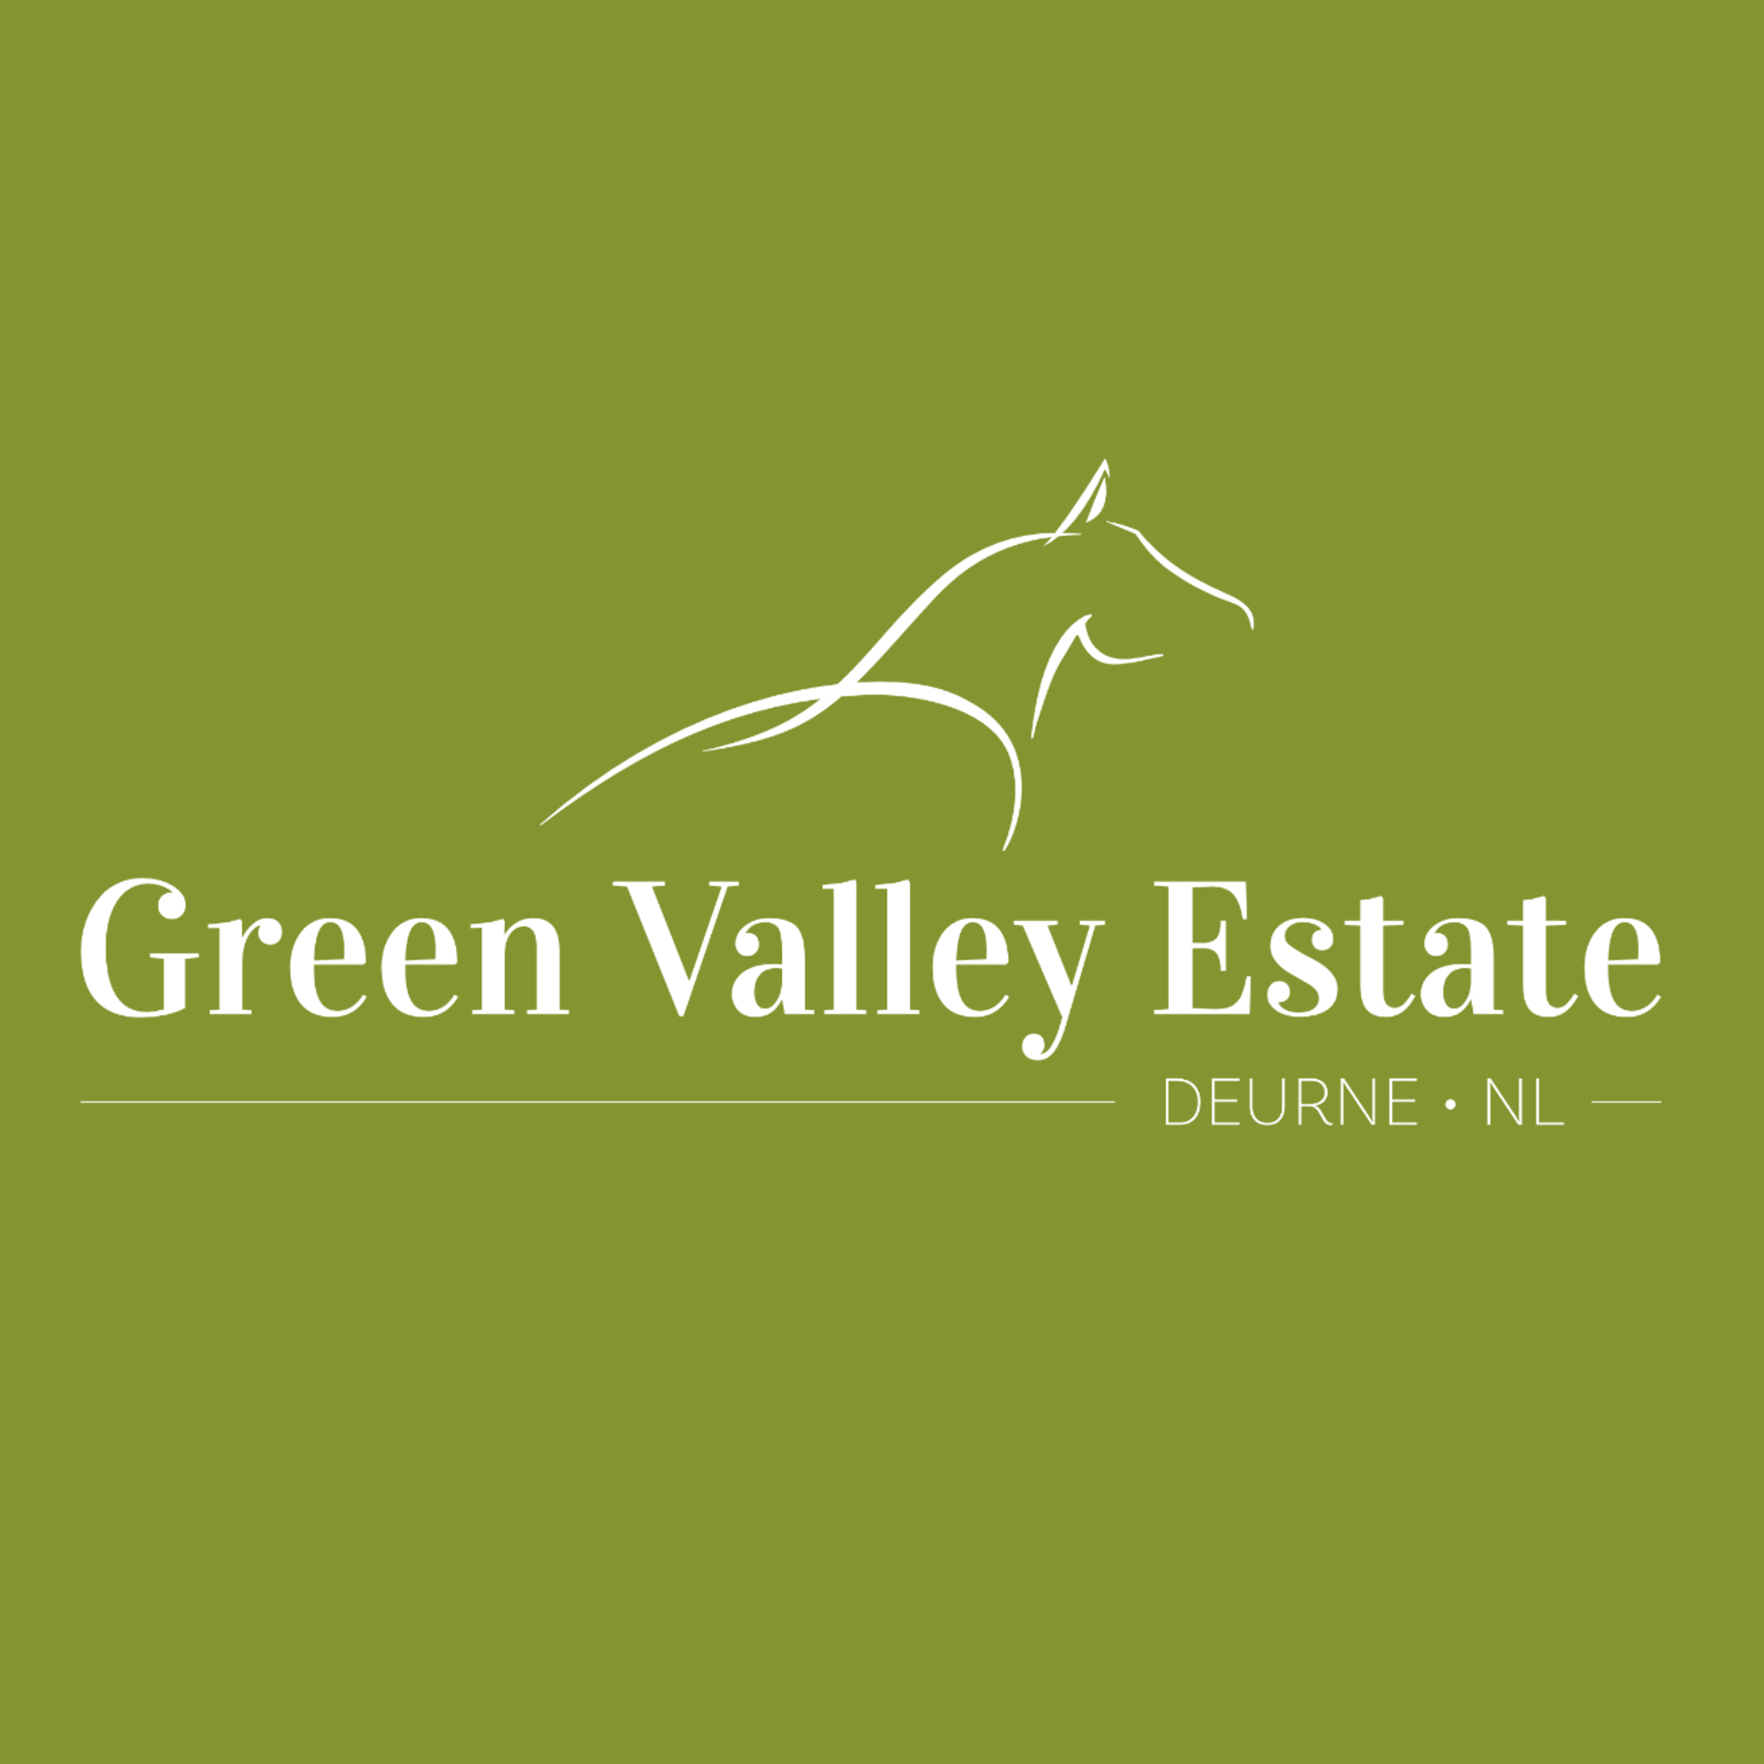 Green Valley Estate Deurne